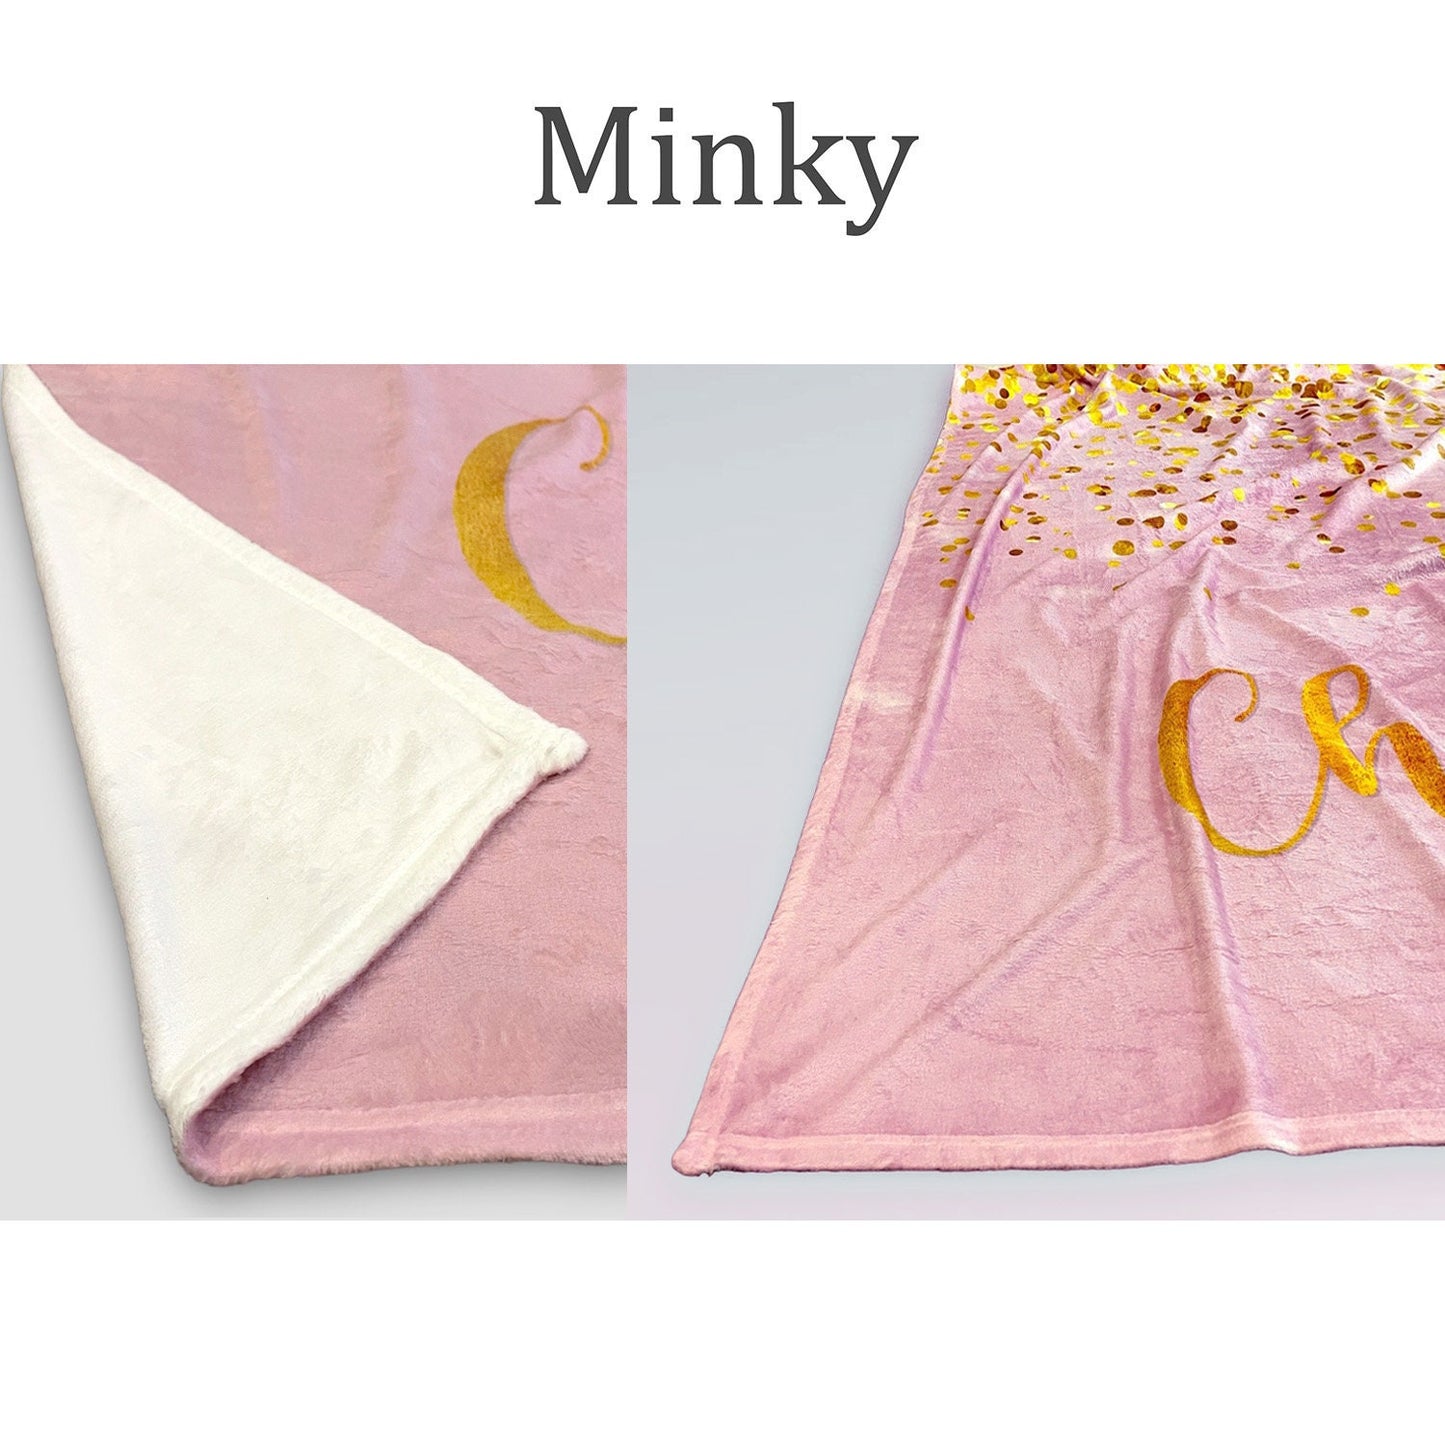 Sunshine Design Personalize blanket, Minky or Sherpa custom blanket, Baby blanket, Kids Blanket, birthday gift idea